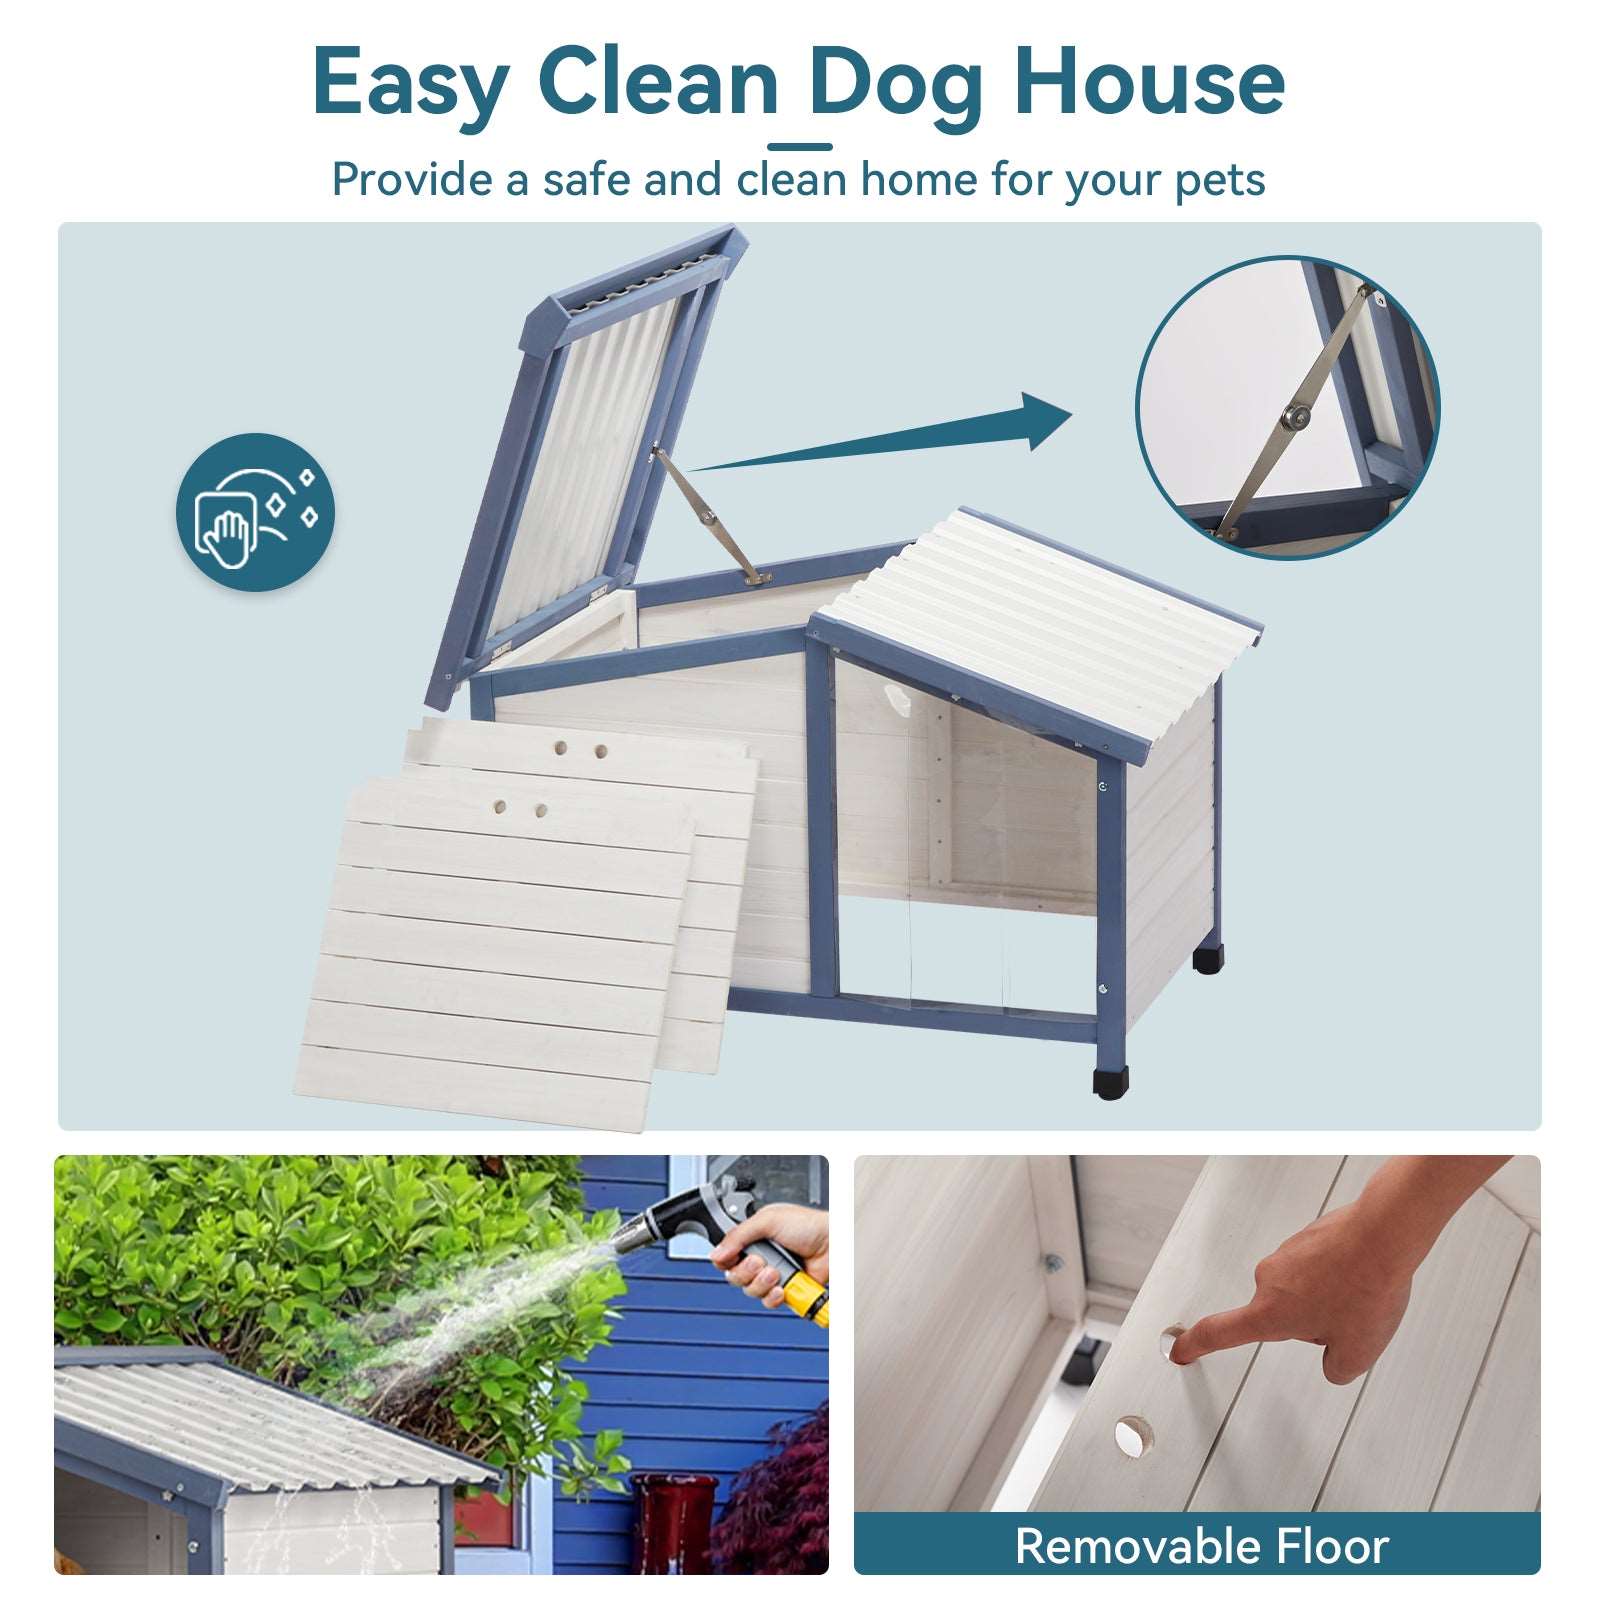 PETSFIT Waterproof PVC Roof Outdoor Dog House